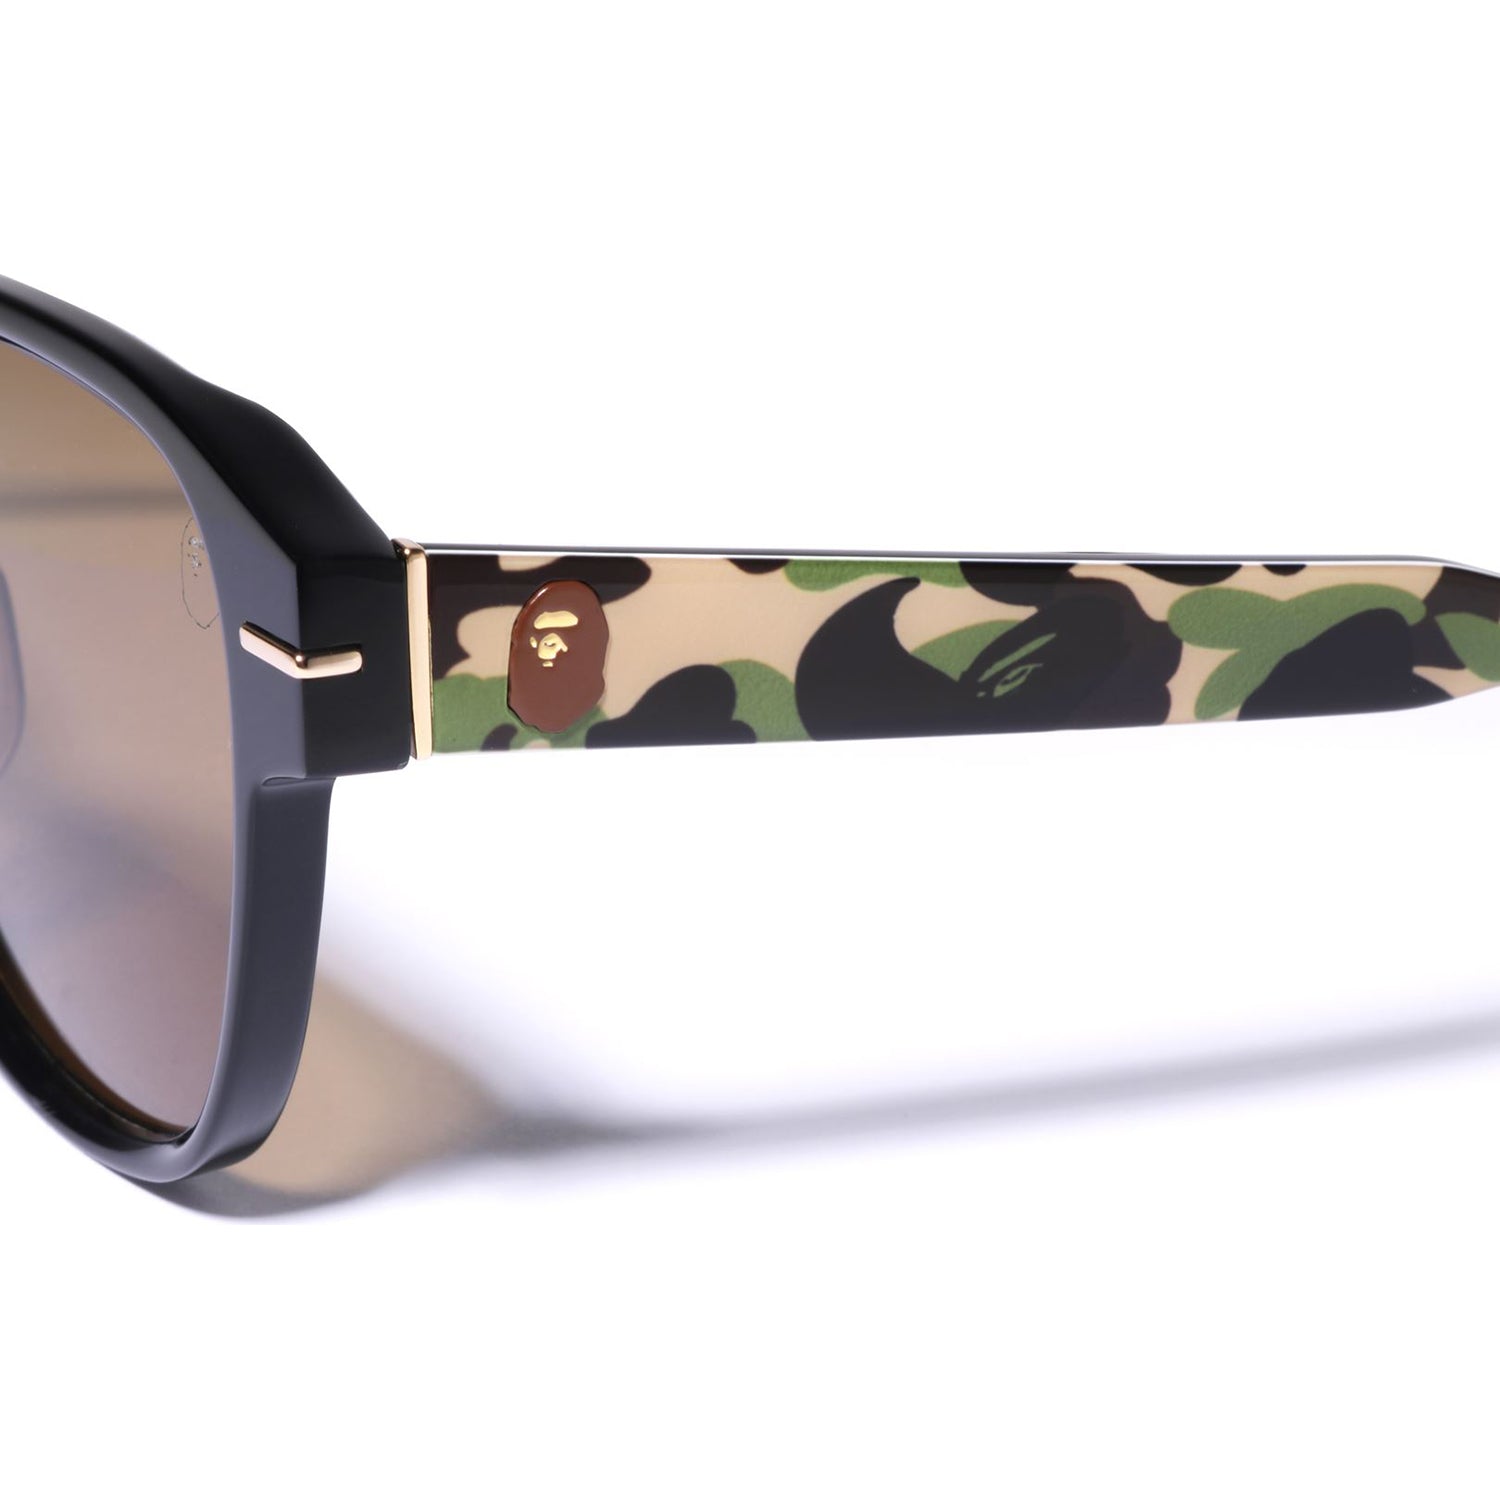 BAPE Frost Camo Accent Sunglasses 5 Clear/Light Green